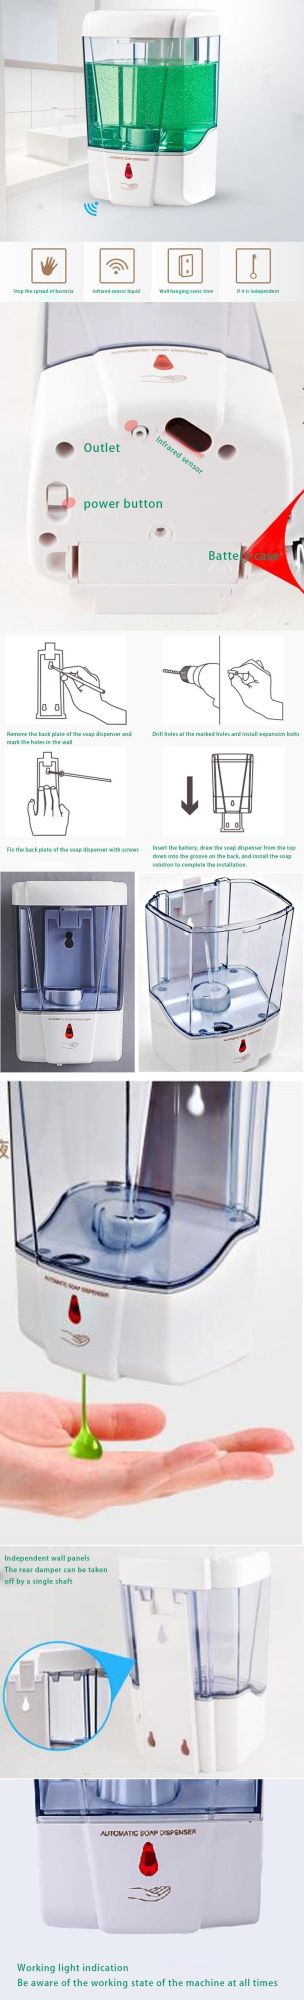 2020 Soap Dispenser Infrared 600ml / Liquid Dispenser Pump Soap Washroom